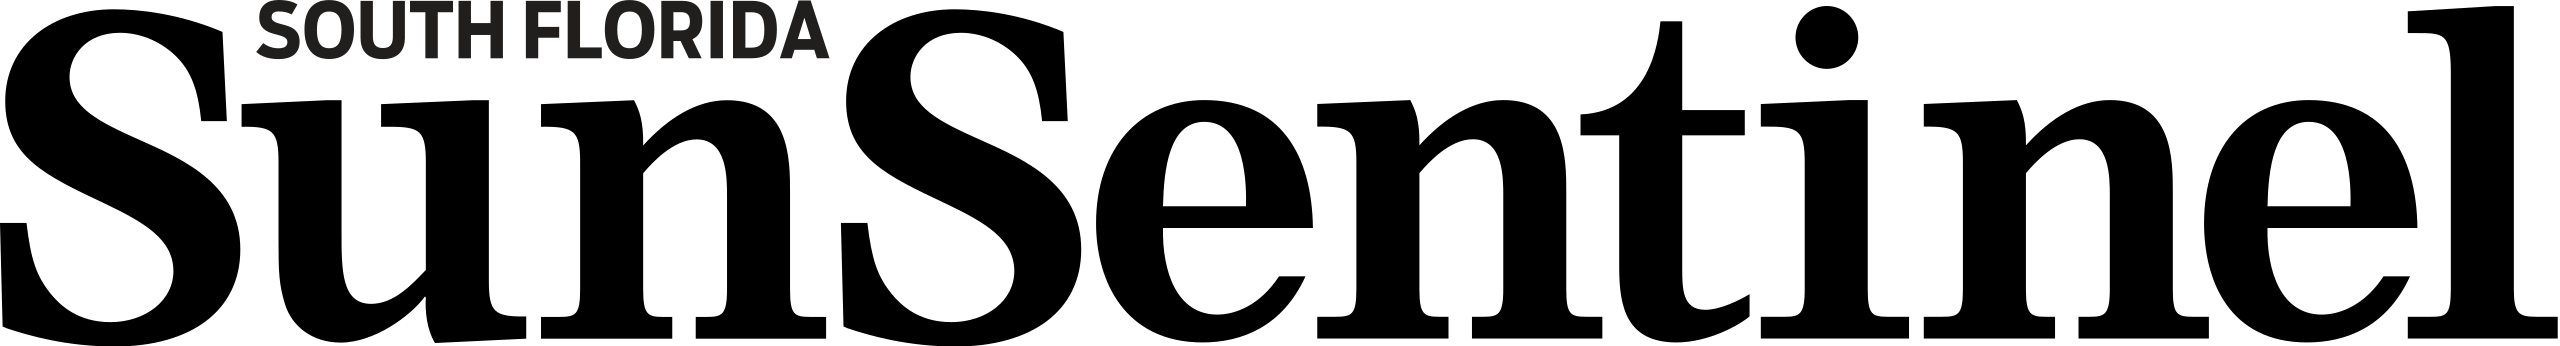 sunsentinel-logo